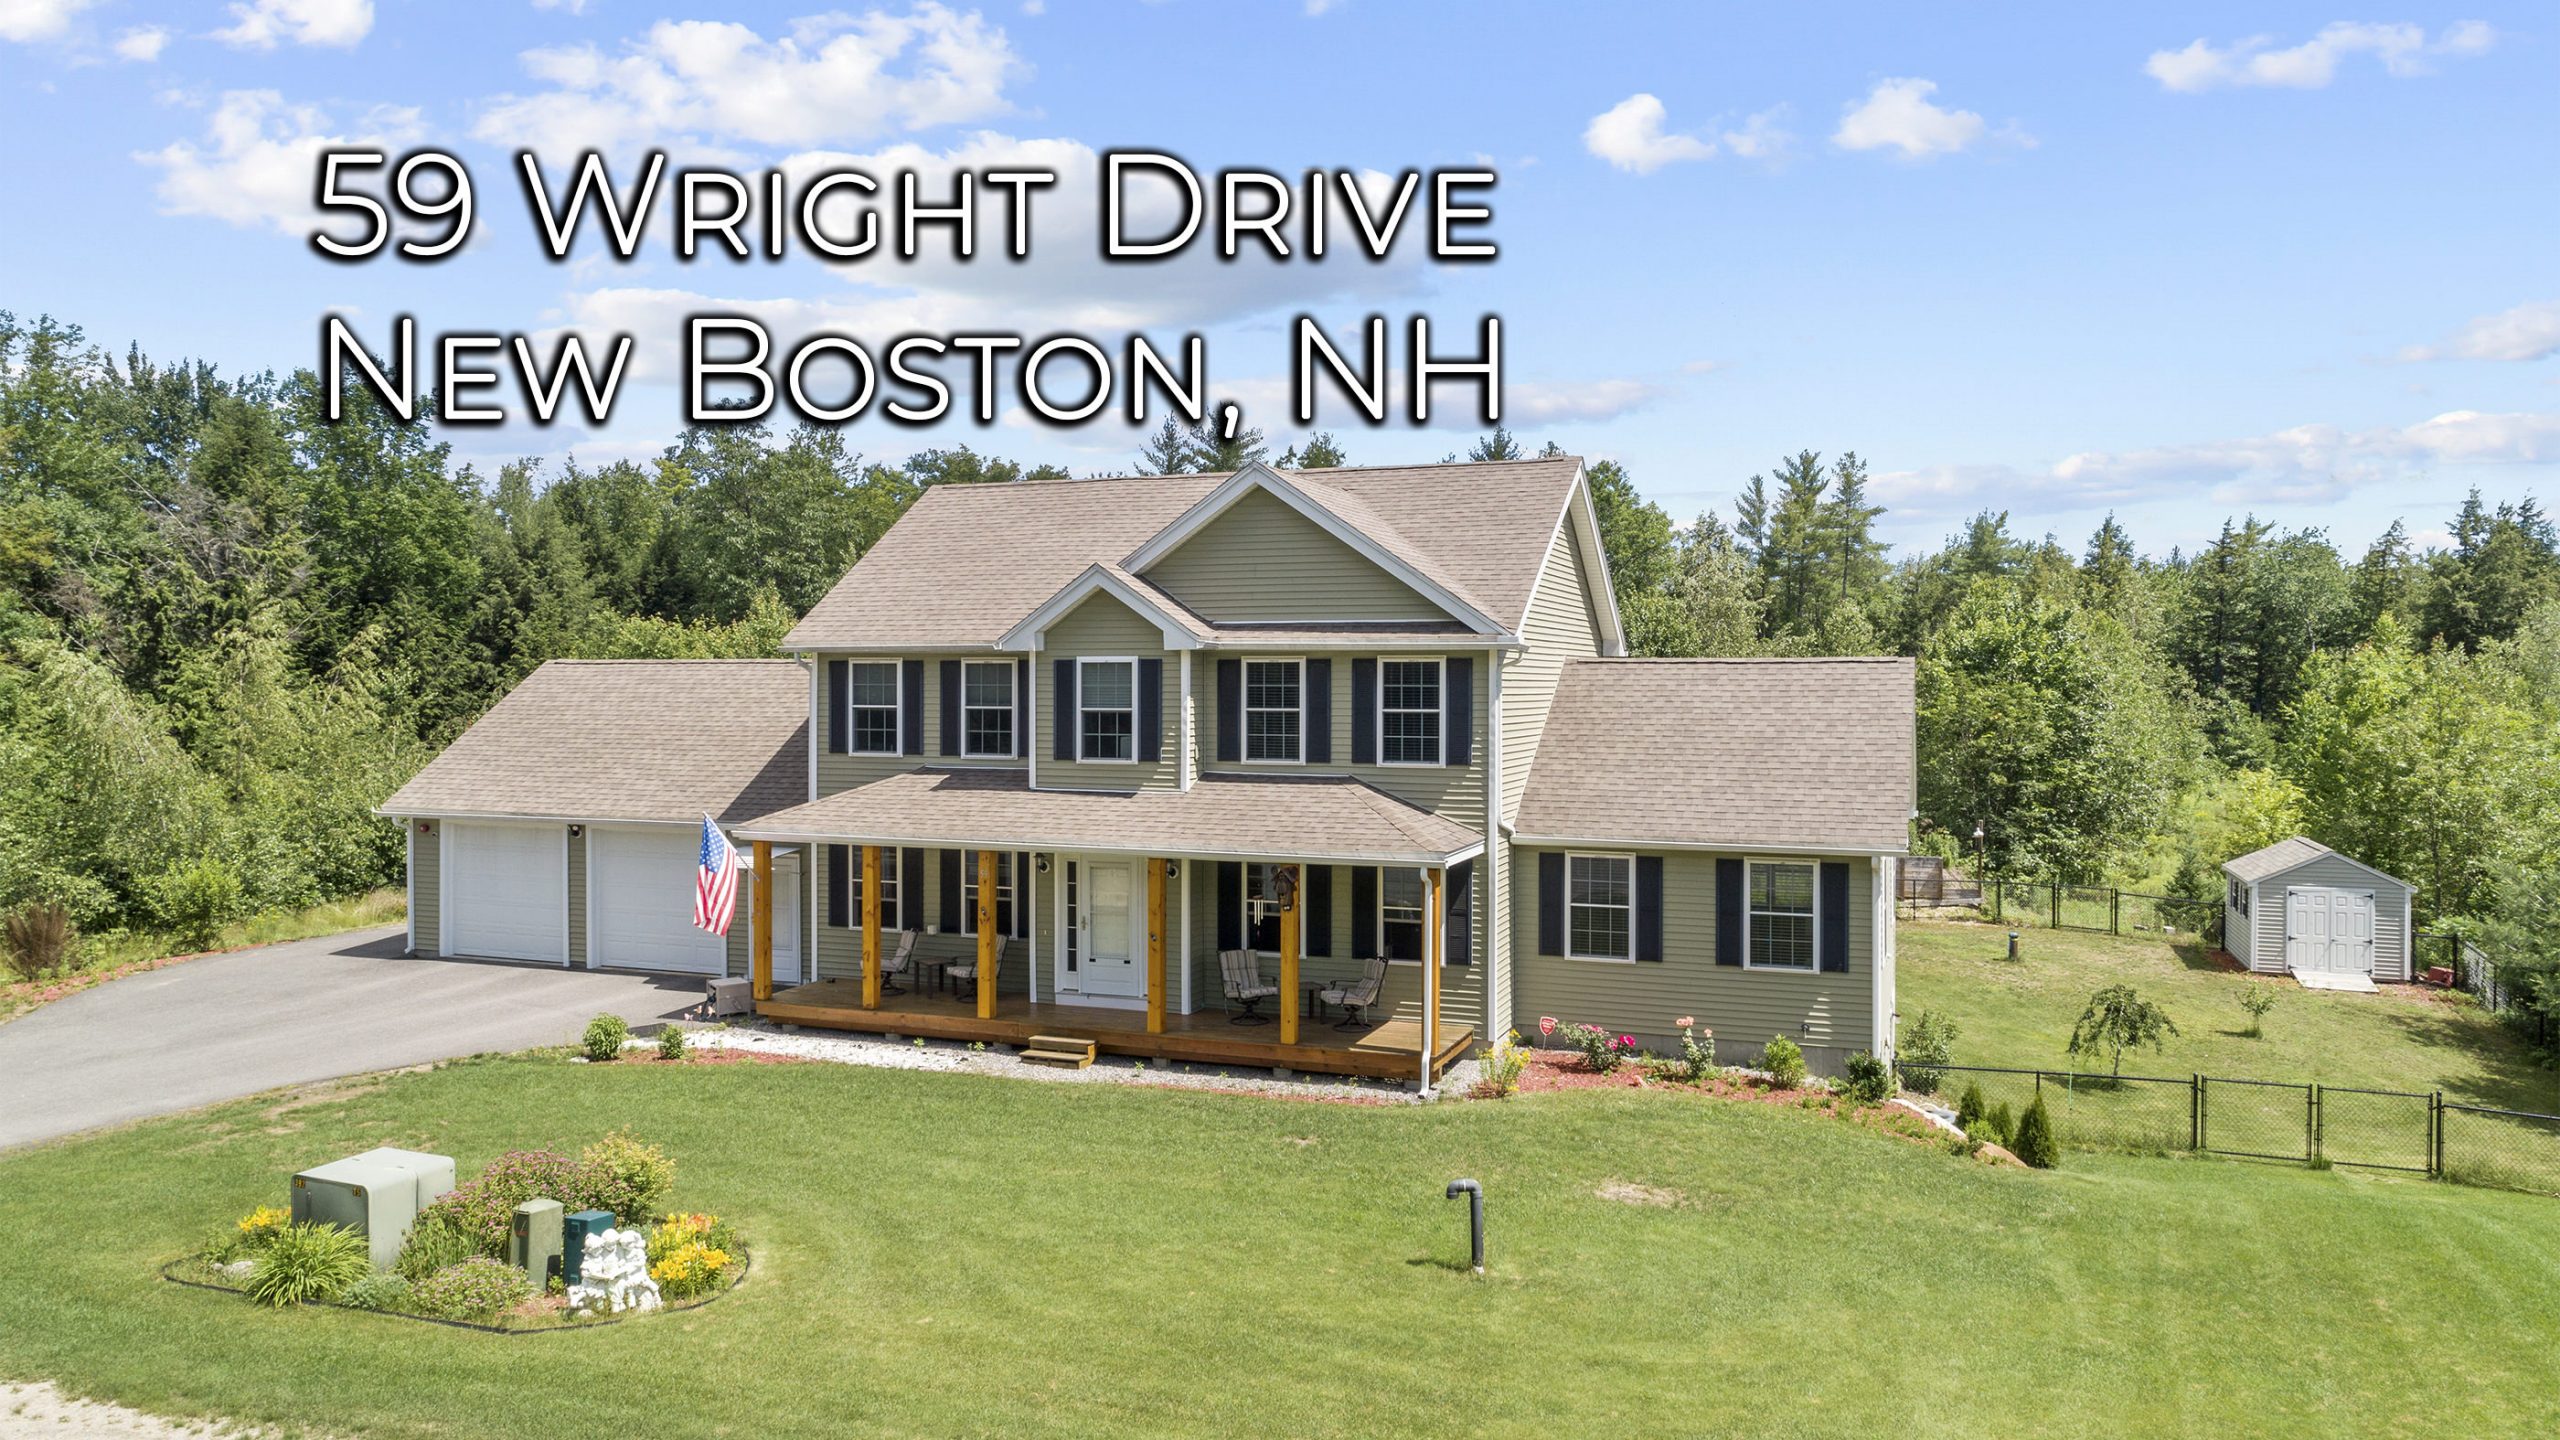 59 Wright Dr New Boston NH 03070